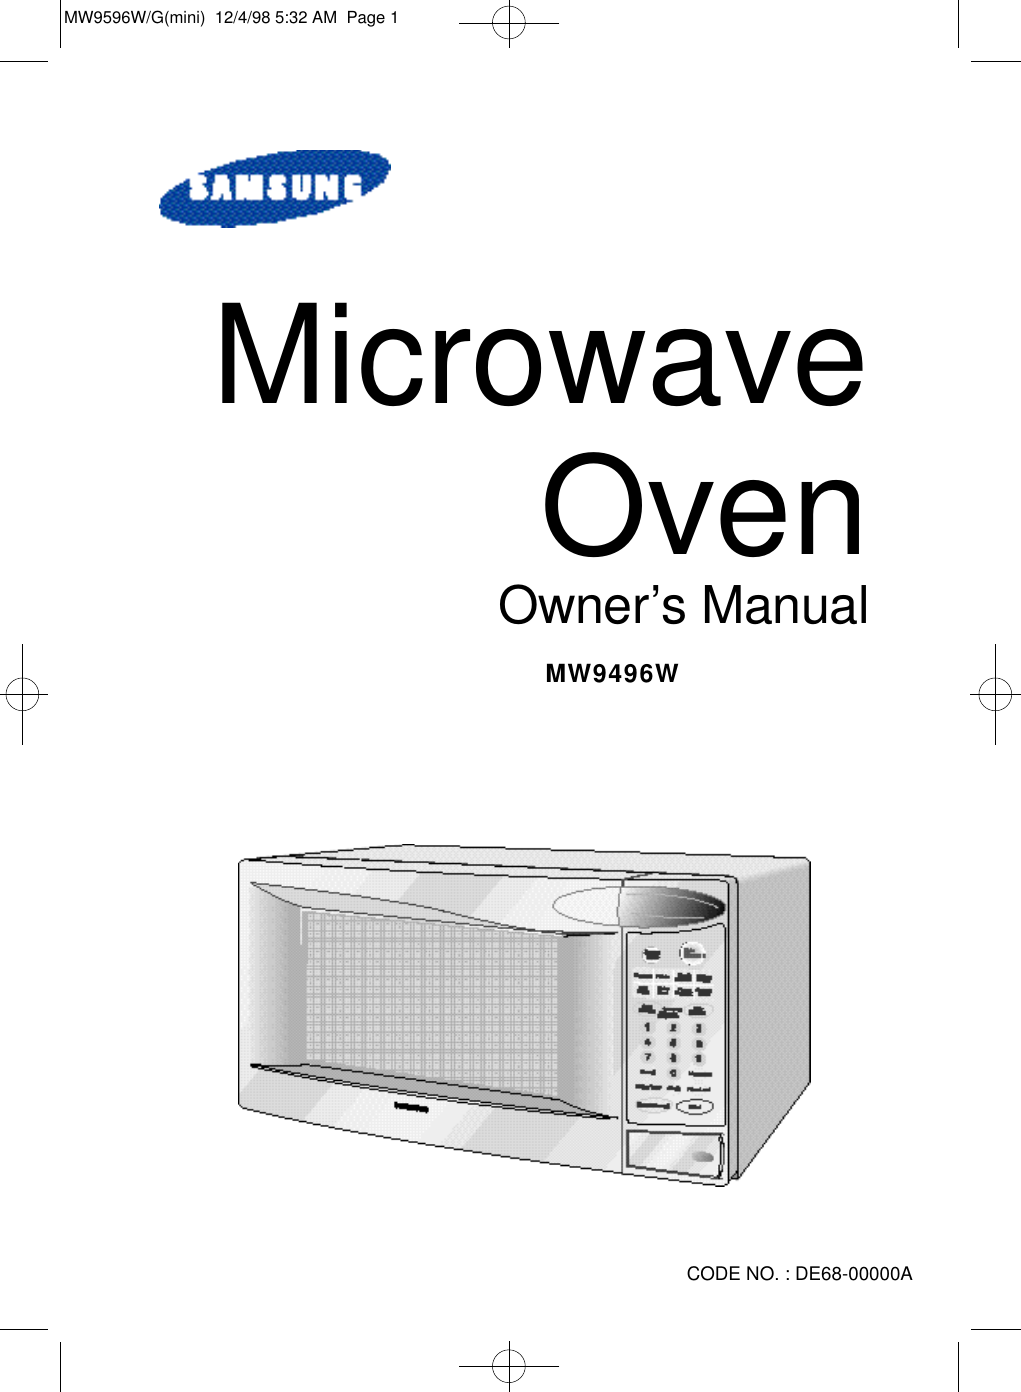 Microwave OvenO w n e r’s ManualMW9496WCODE NO. : DE68-00000AMW9596W/G(mini)  12/4/98 5:32 AM  Page 1